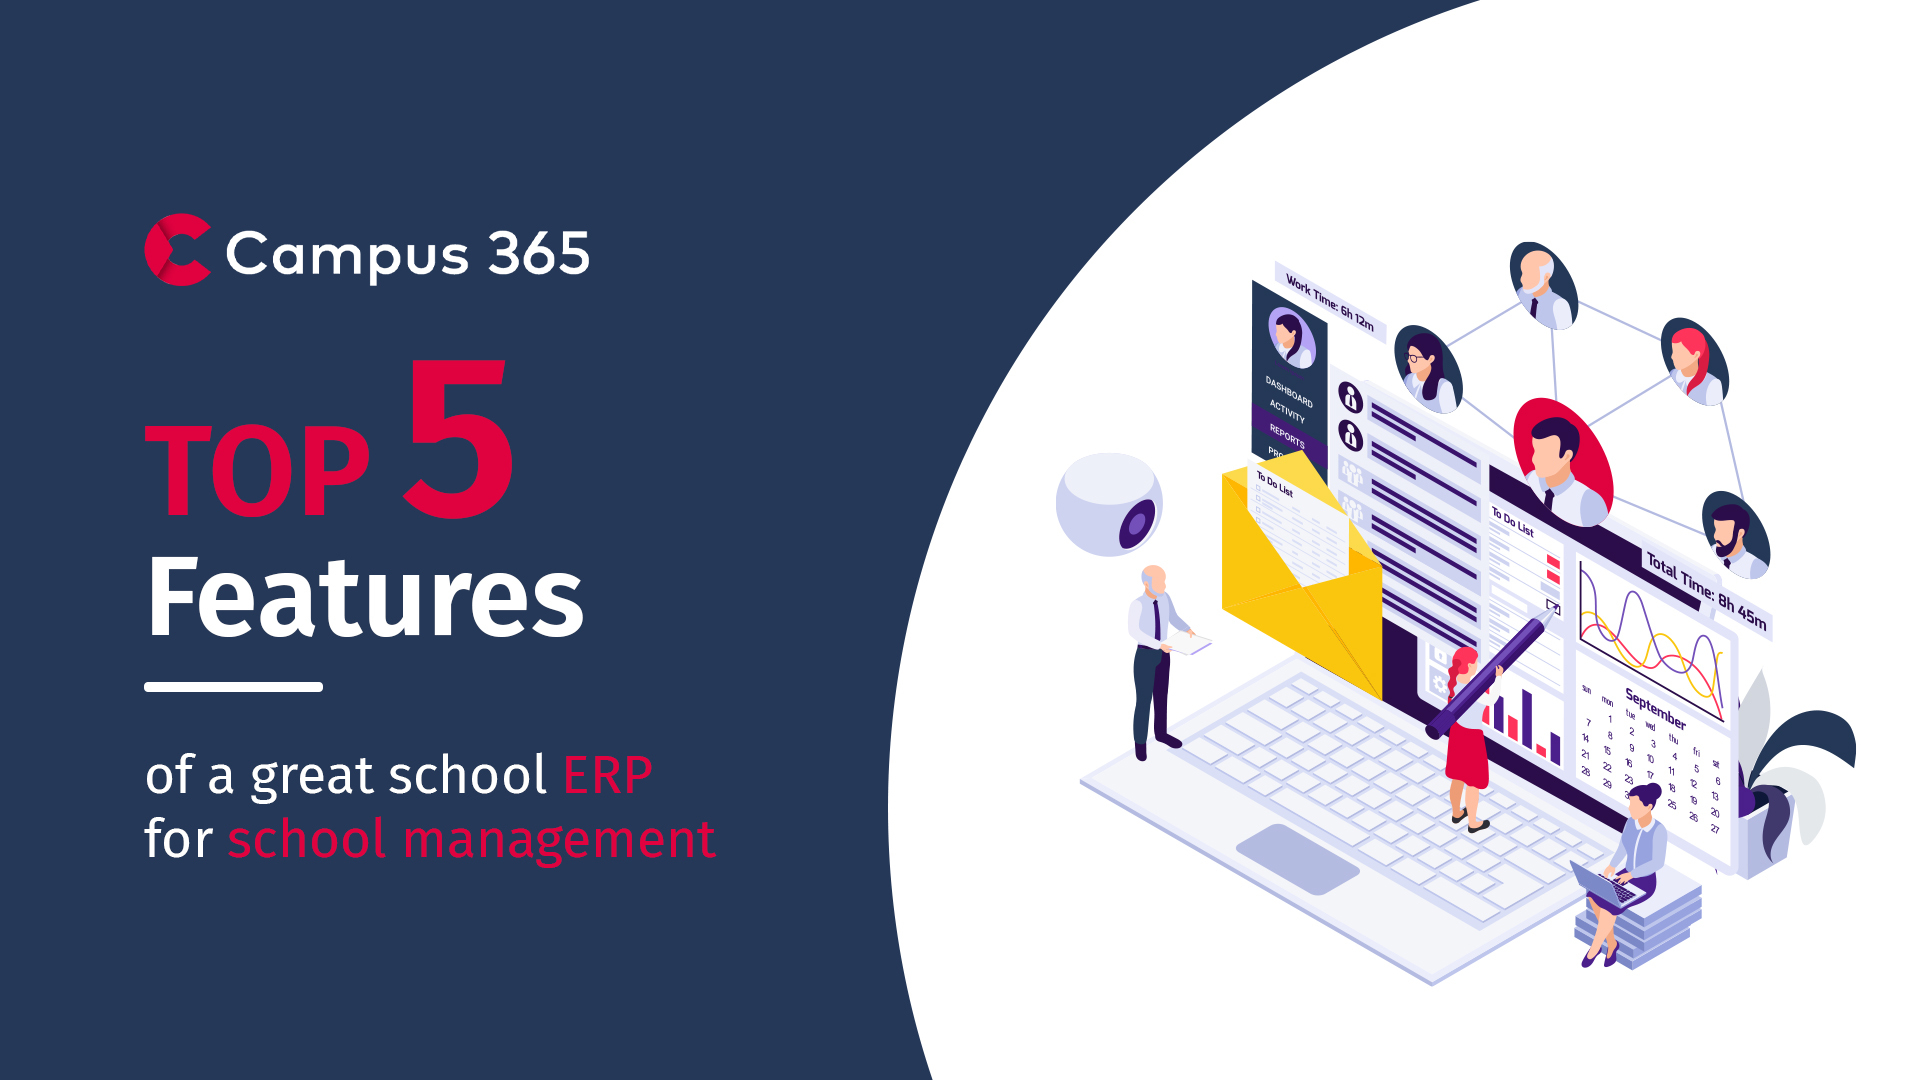 Campus 365 School ERP features